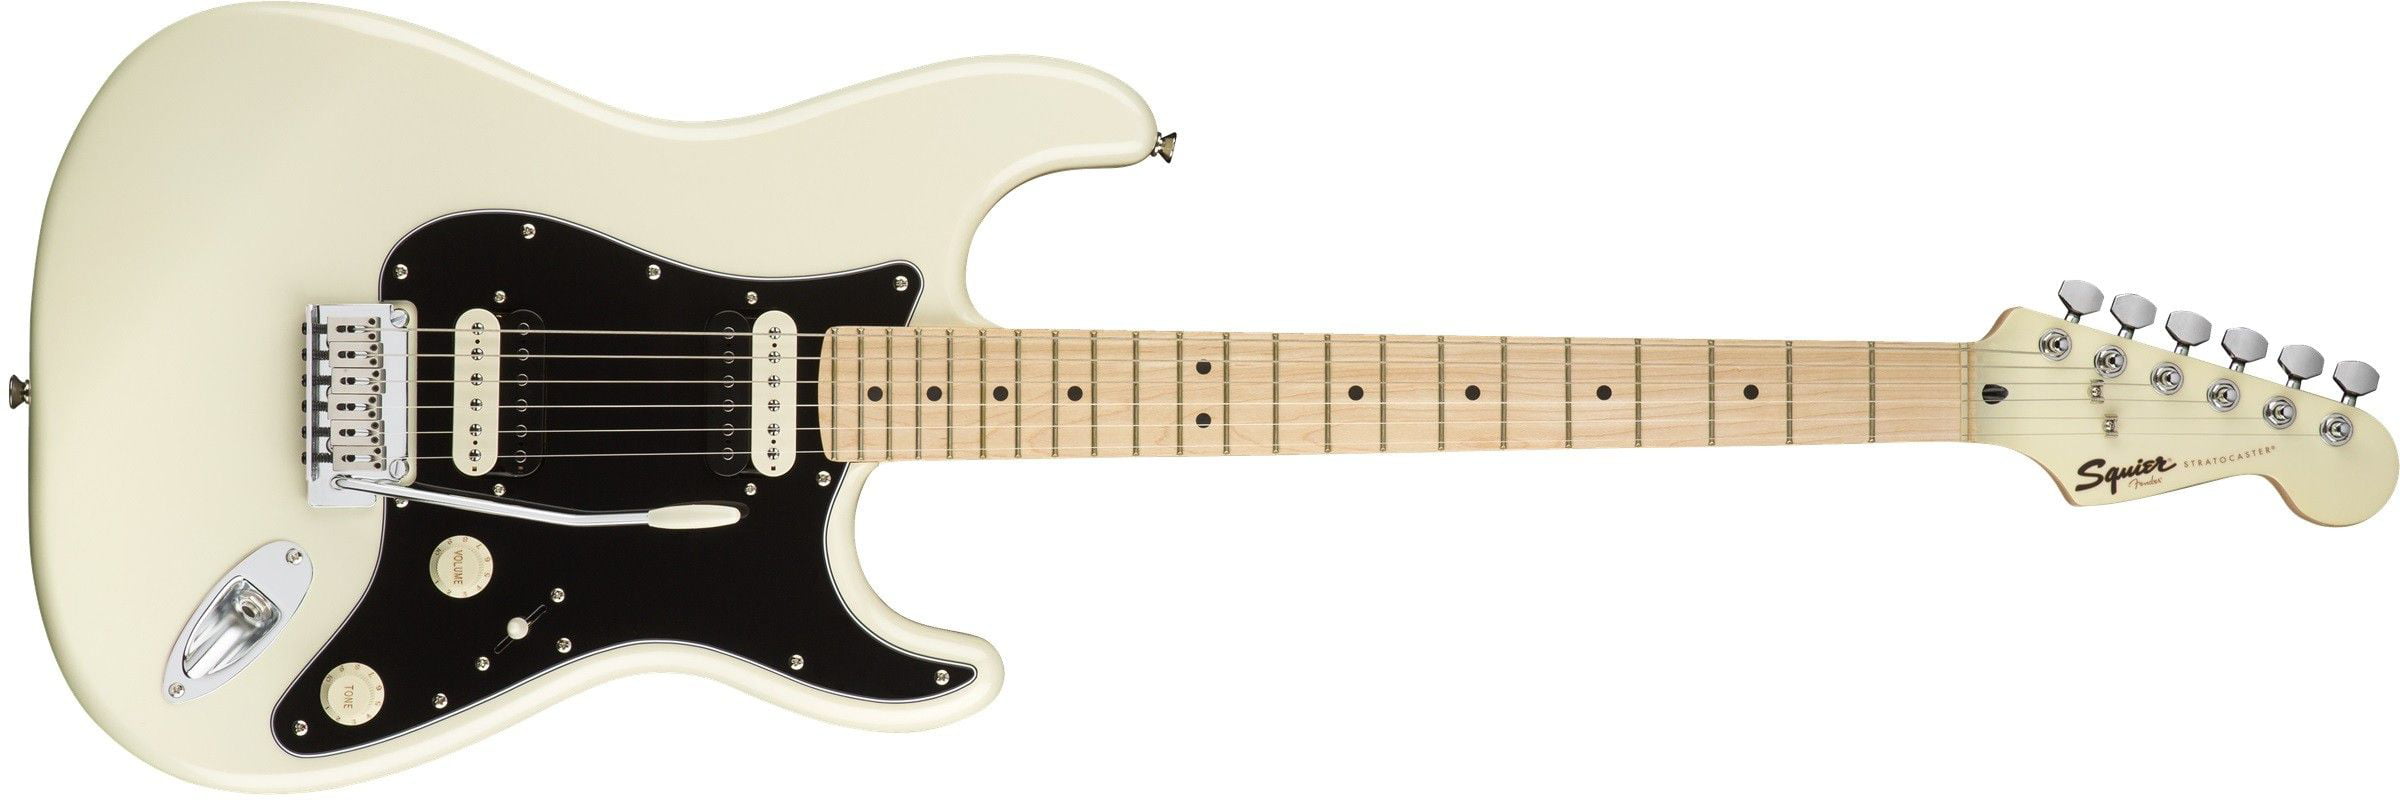 Fender Squier Contemporary Stratocaster Hh Maple Fingerboard Pearl